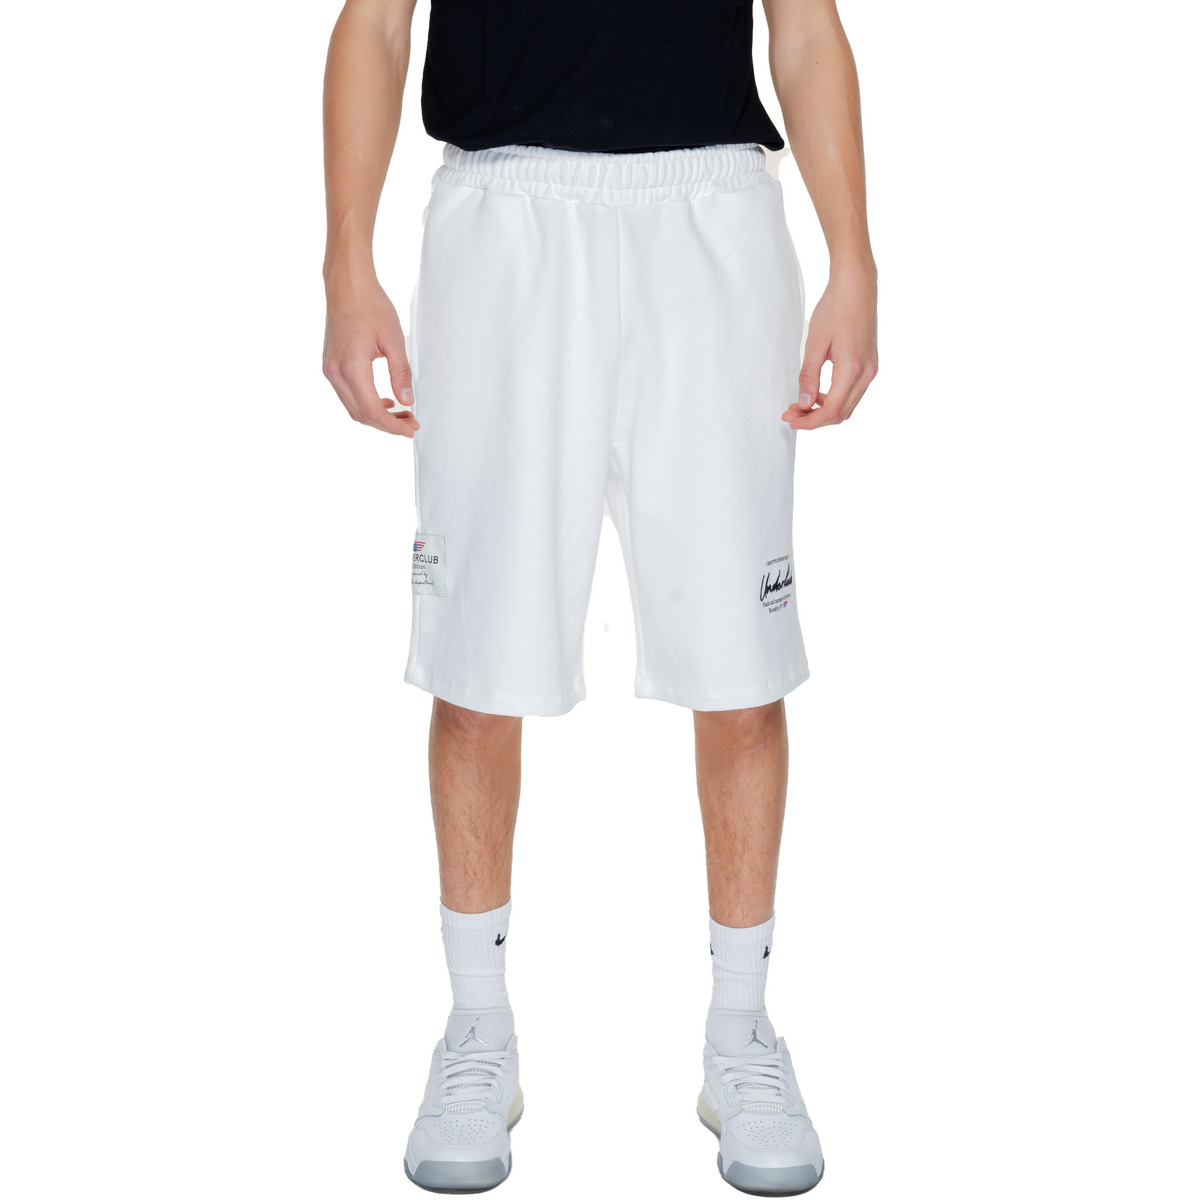 Vêtements Homme Shorts / Bermudas Underclub 24EUC80049 Blanc